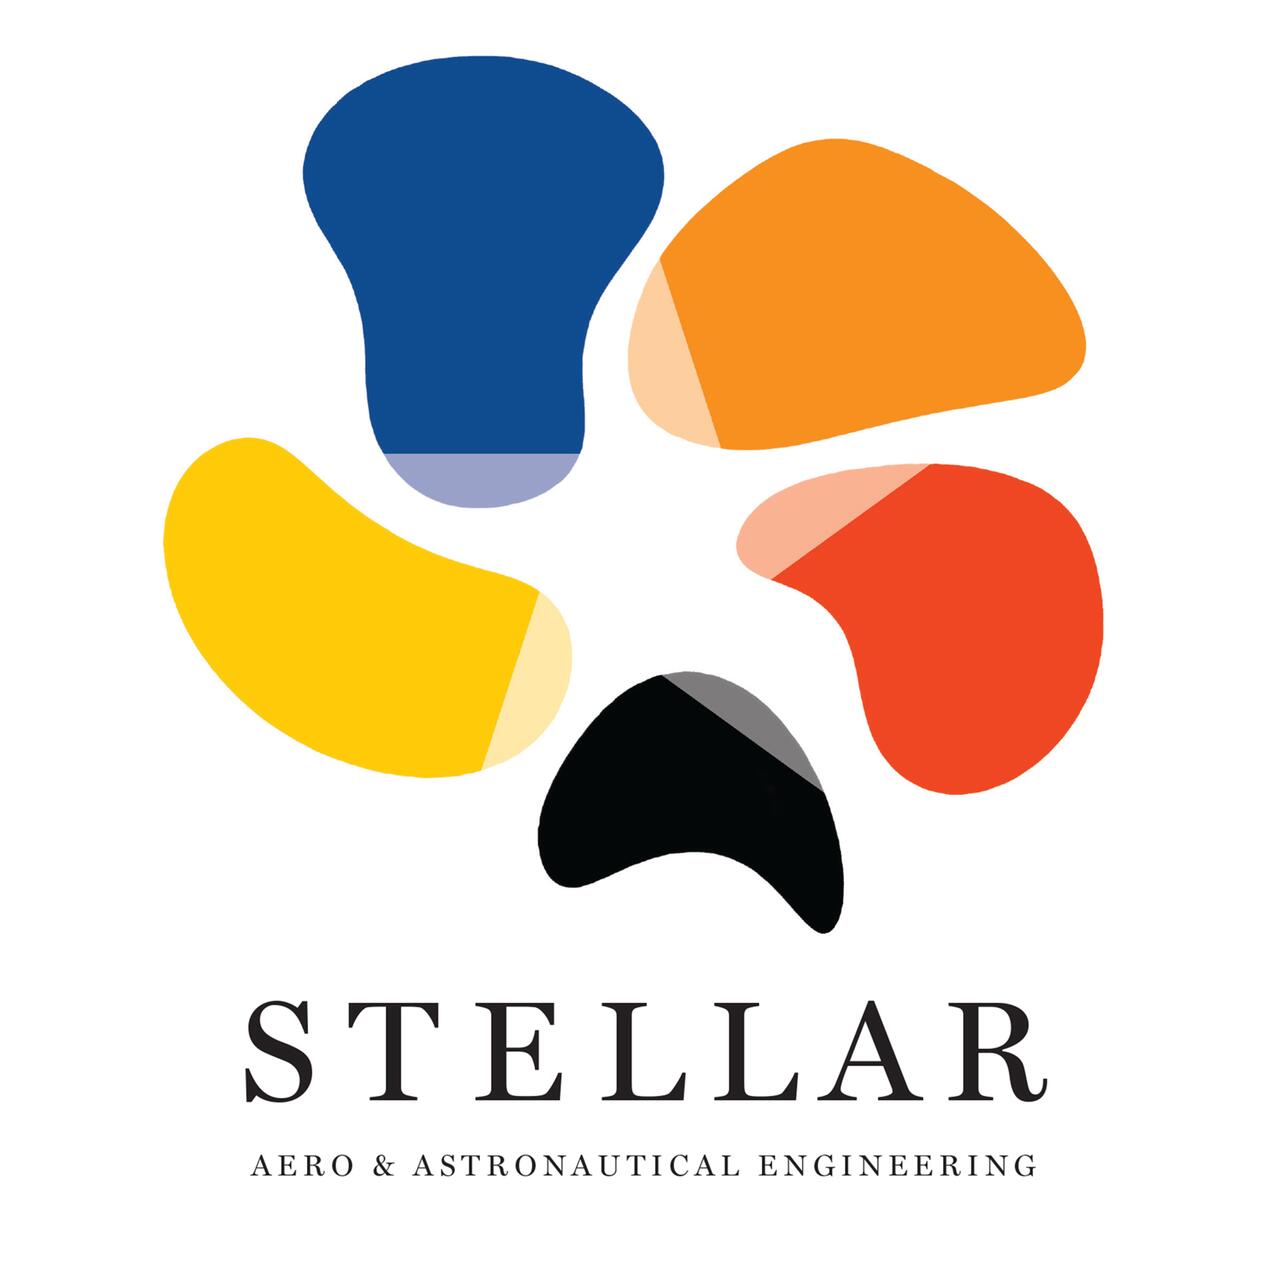 19A-117_Stellar Aero & Astronautical Engineering Logo_Joseph Michael Essex